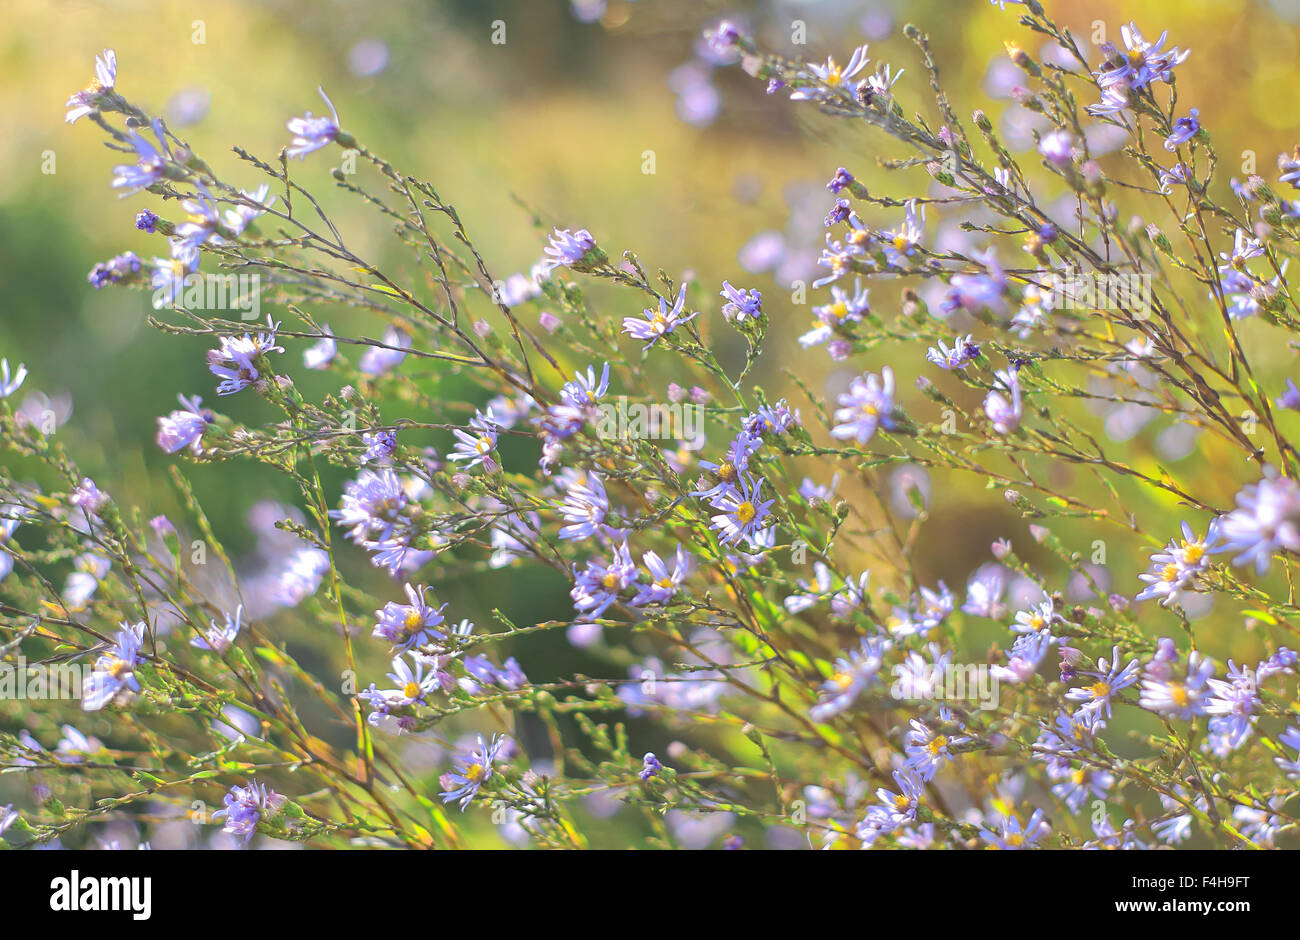 Purple tansy aster flowers in autumn wind, Latin name: Machaeranthera bigelovii Stock Photo